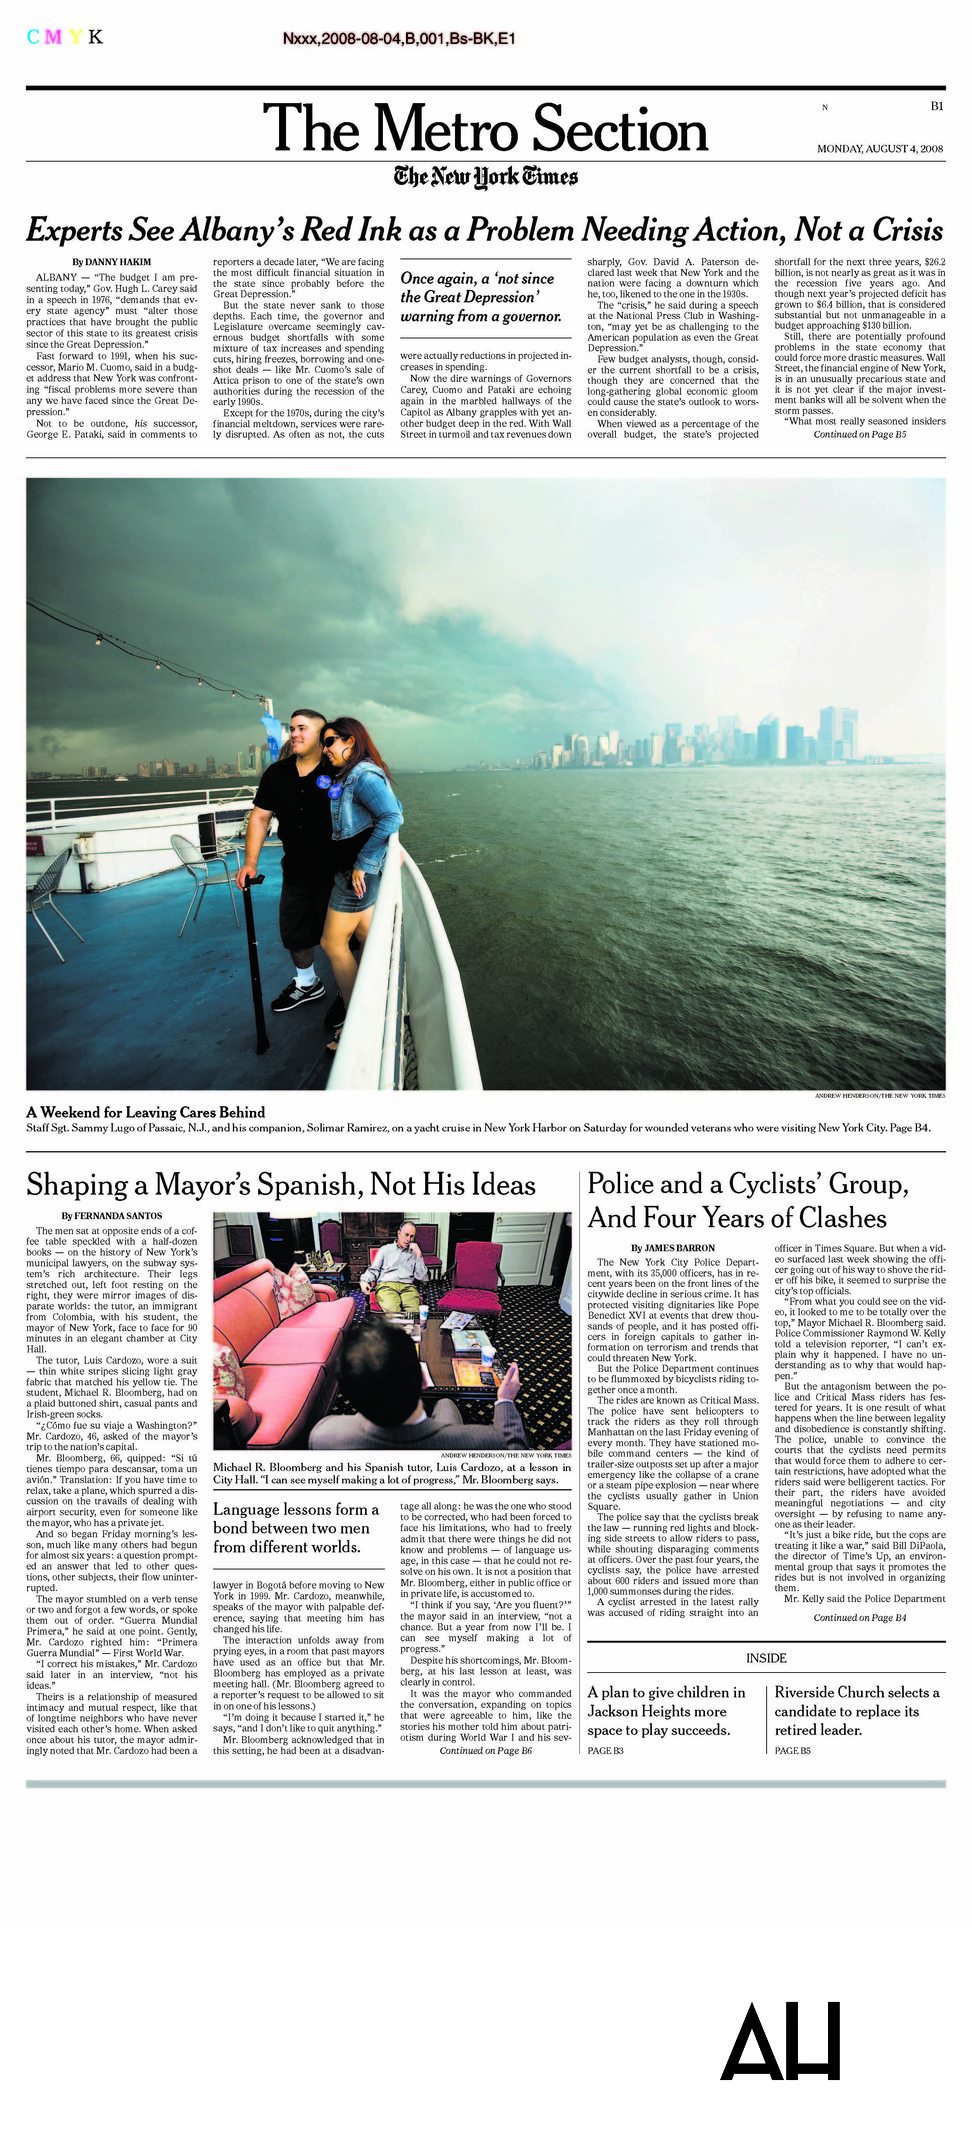 New York Times Photo Intern